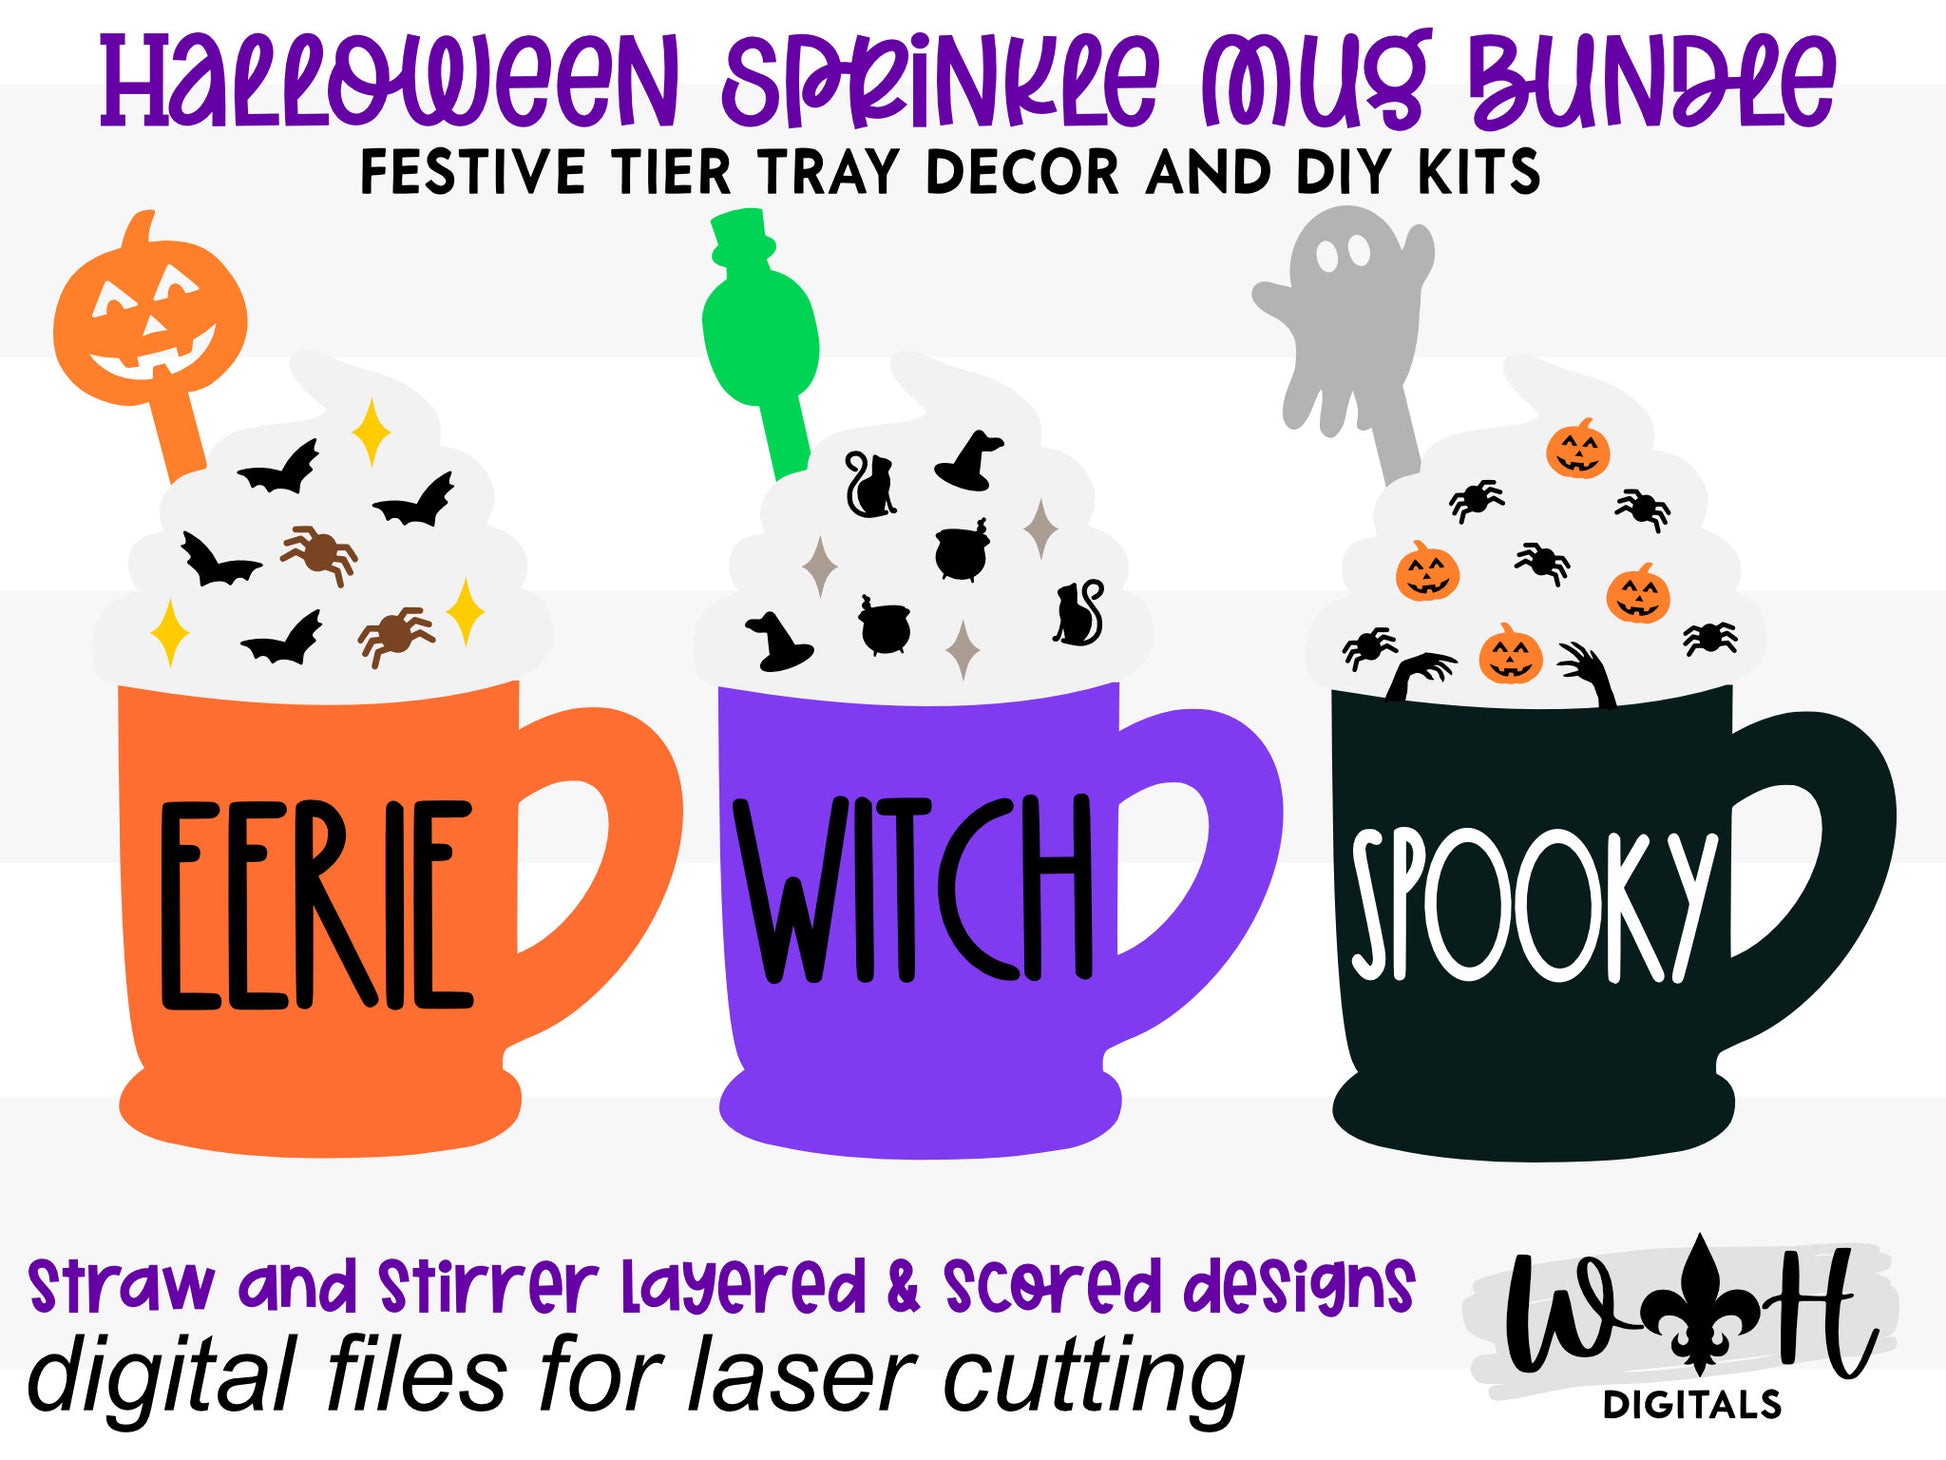 Halloween Sprinkle Mugs Bundle - Seasonal Tiered Tray Decor and DIY Kits - Cut File For Glowforge Lasers - Digital SVG File